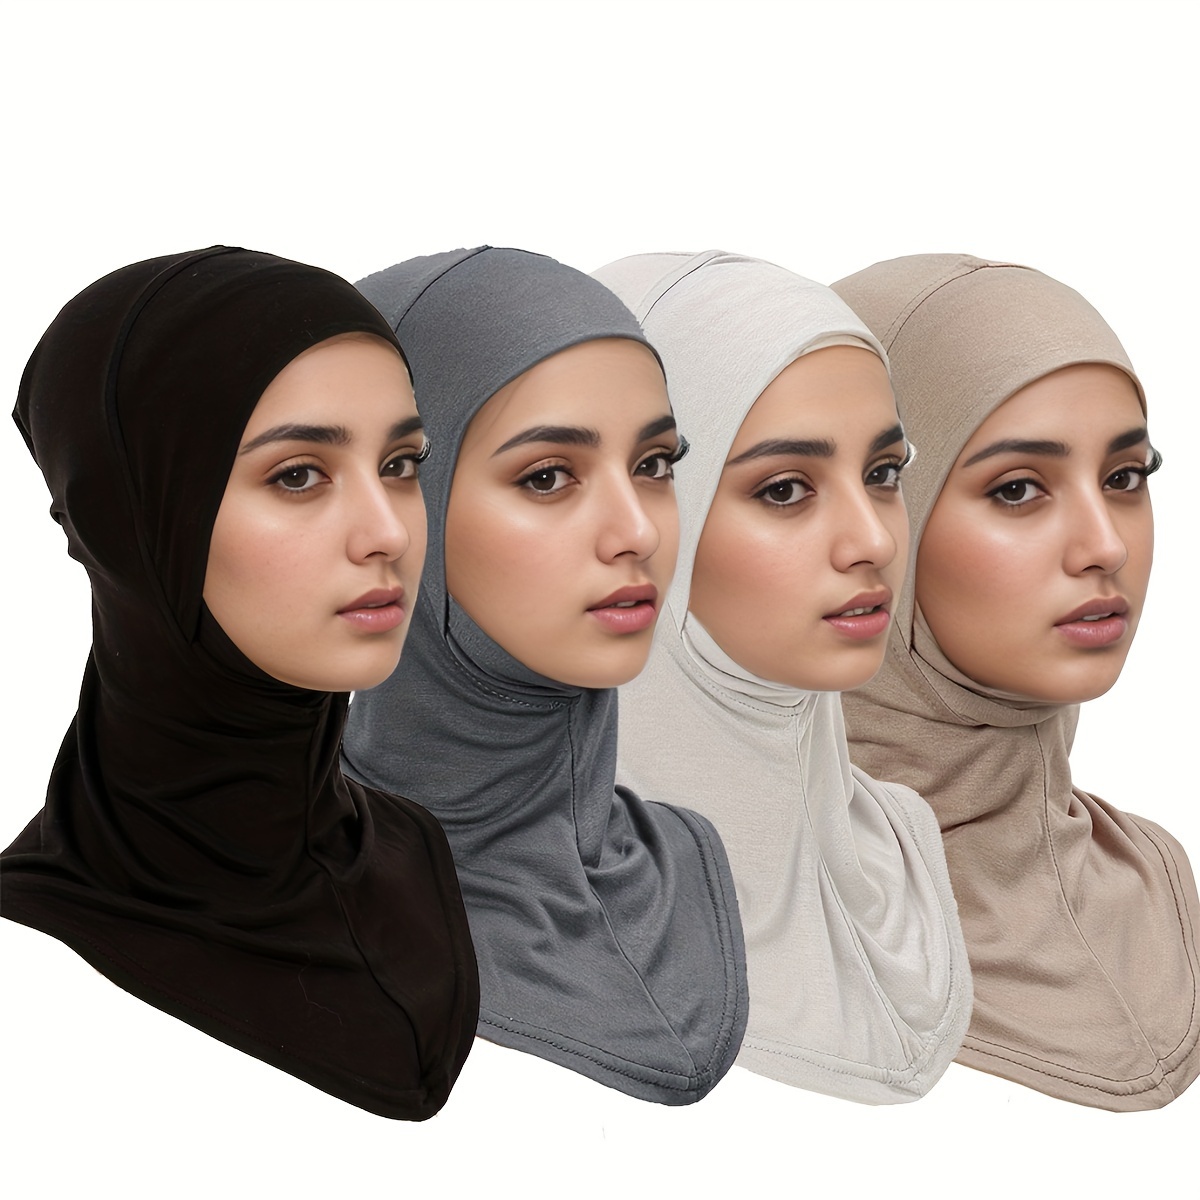 

4pcs Elegant Style Women's Instant Hijab, Breathable Cotton Base Caps, Solid Colors Lightweight Head Wraps